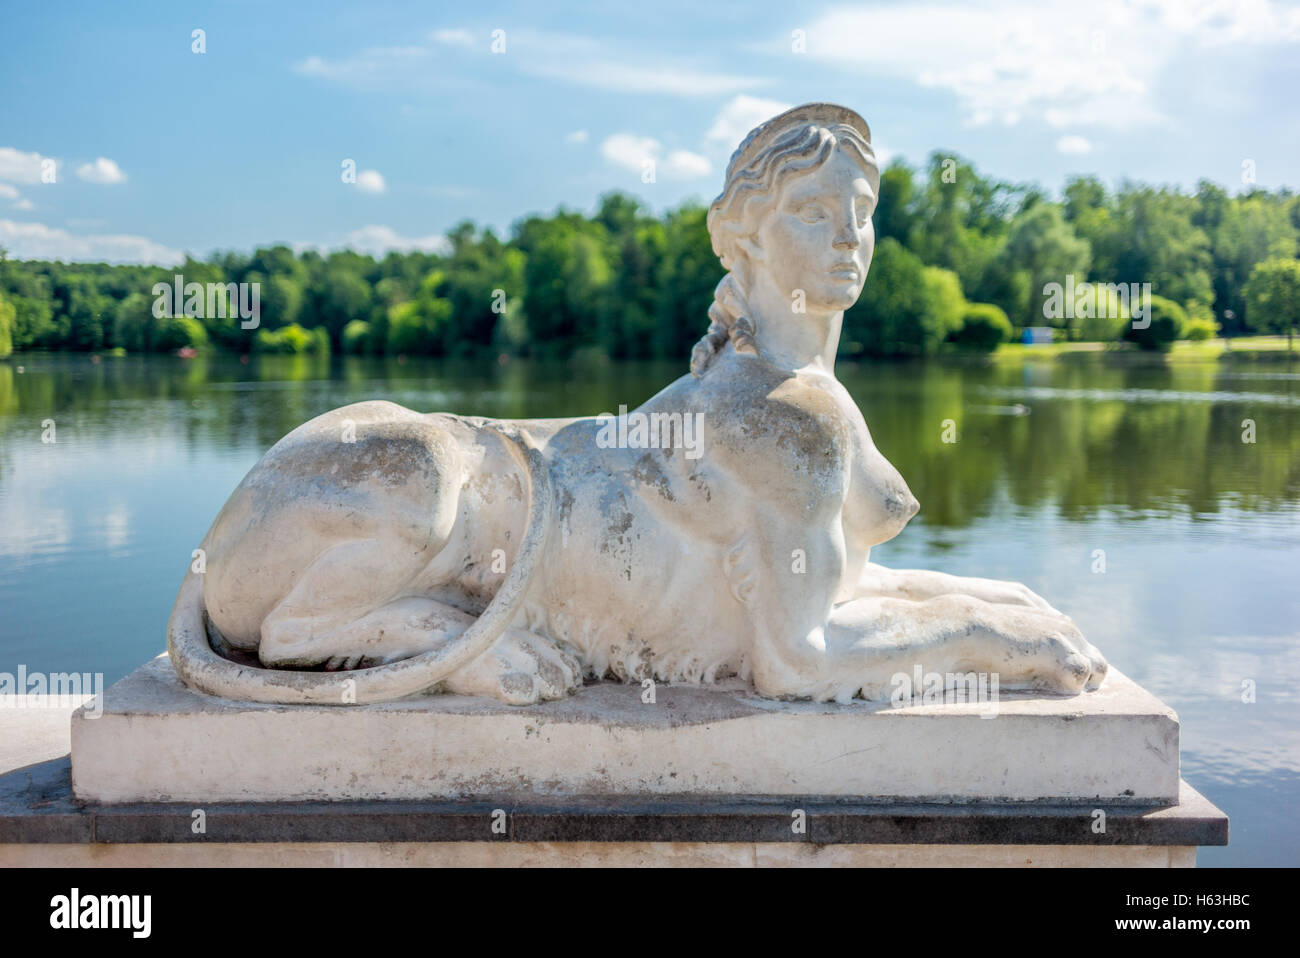 Sphinx auf dem See des Zarizyno Parks in Moskau - 1 Stockfoto